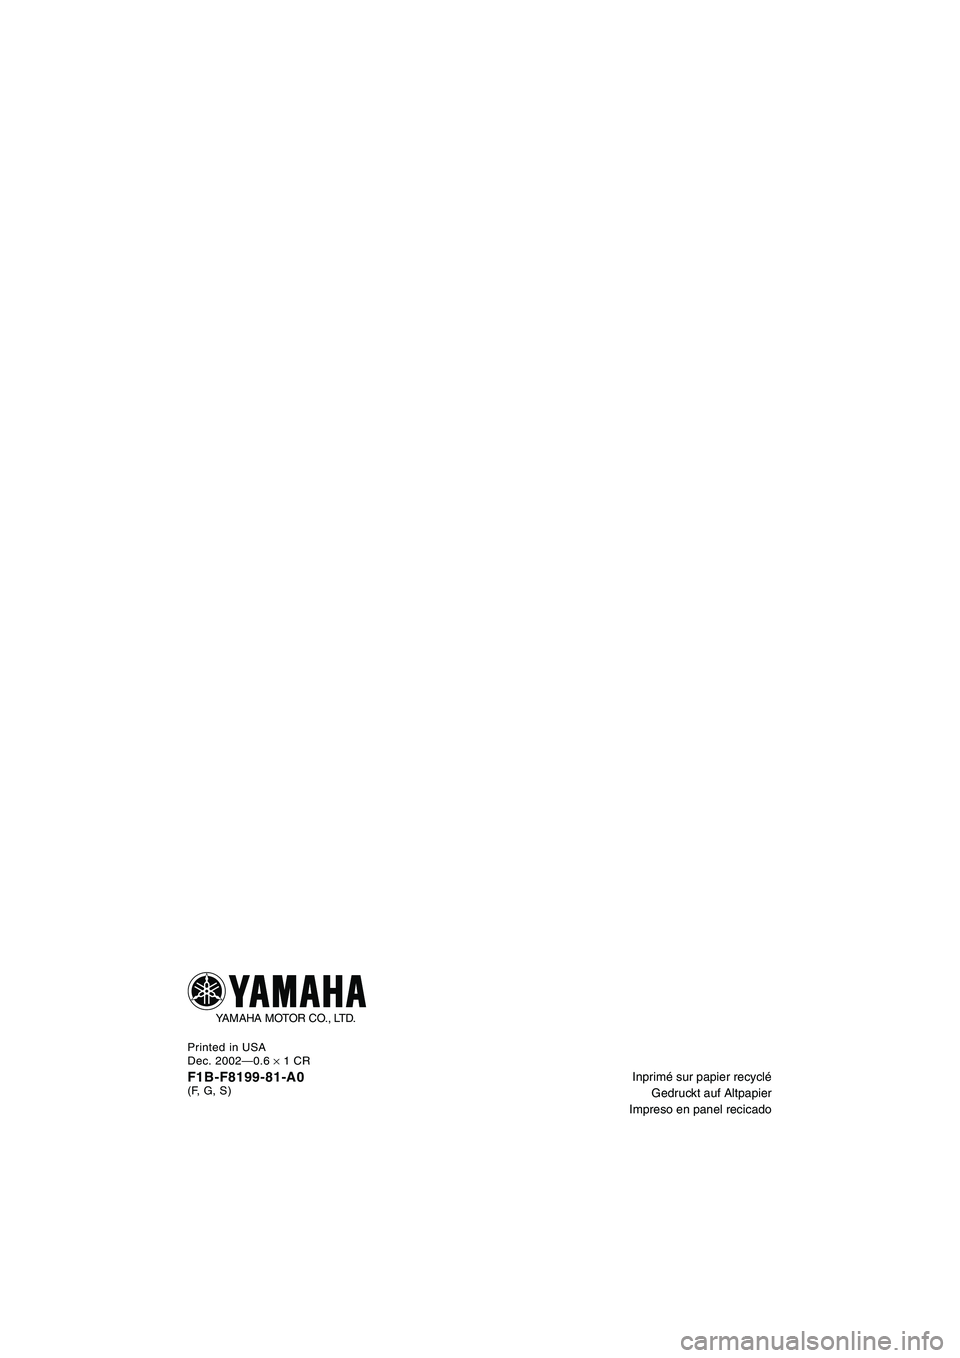 YAMAHA FX 2003  Notices Demploi (in French) Inprimé sur papier recyclé
Gedruckt auf Altpapier
Impreso en panel recicado
Printed in USA
Dec. 2002—0.6 
× 1 CR
F1B-F8199-81-A0(F, G, S)
YAMAHA MOTOR CO., LTD.
UF1B81A0.book  Page 1  Tuesday, No